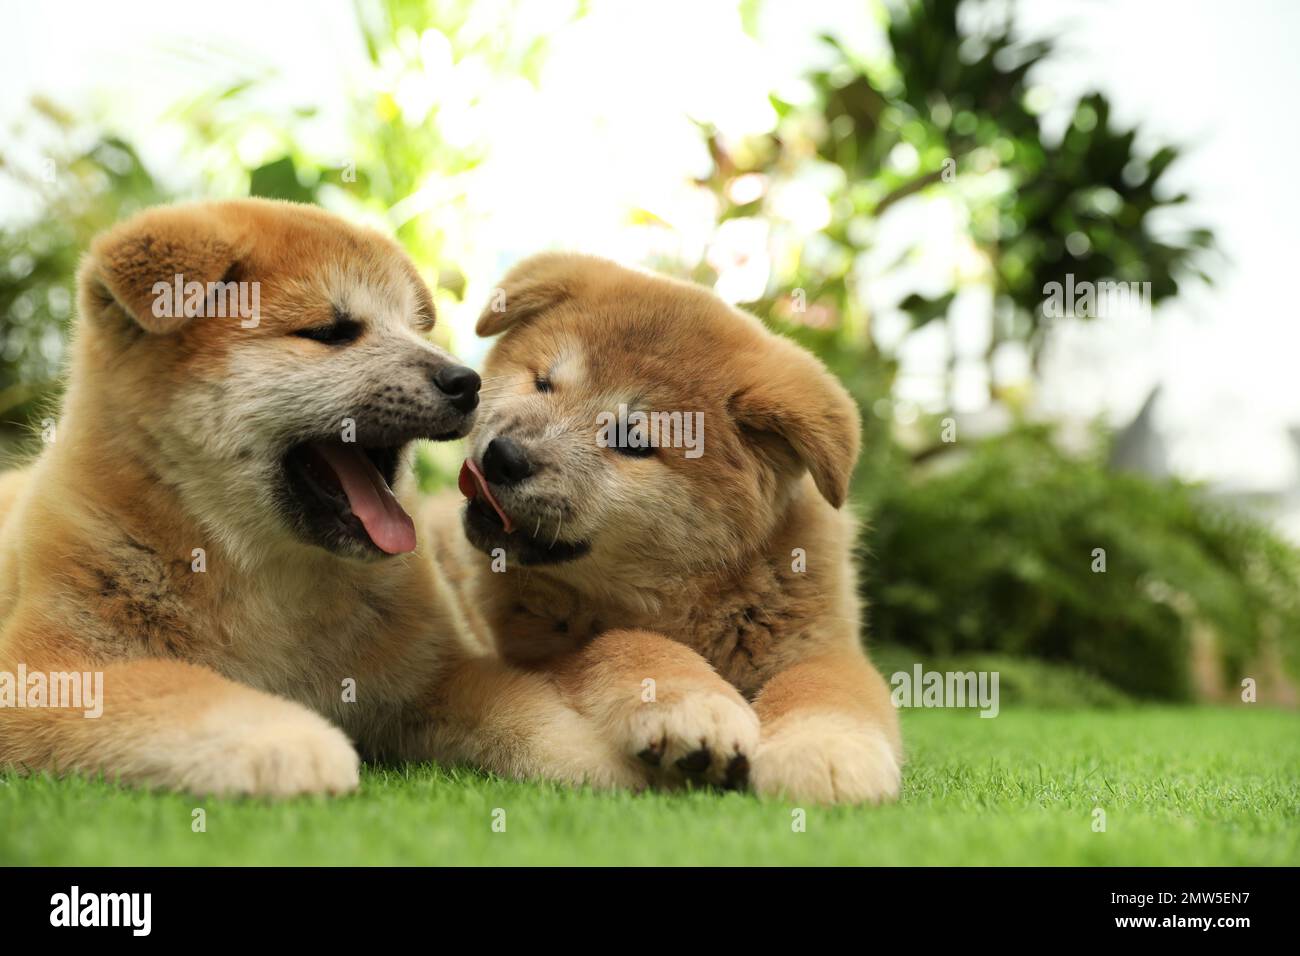 Cute Akita Inu puppies on green grass outdoors. Baby animals Stock Photo